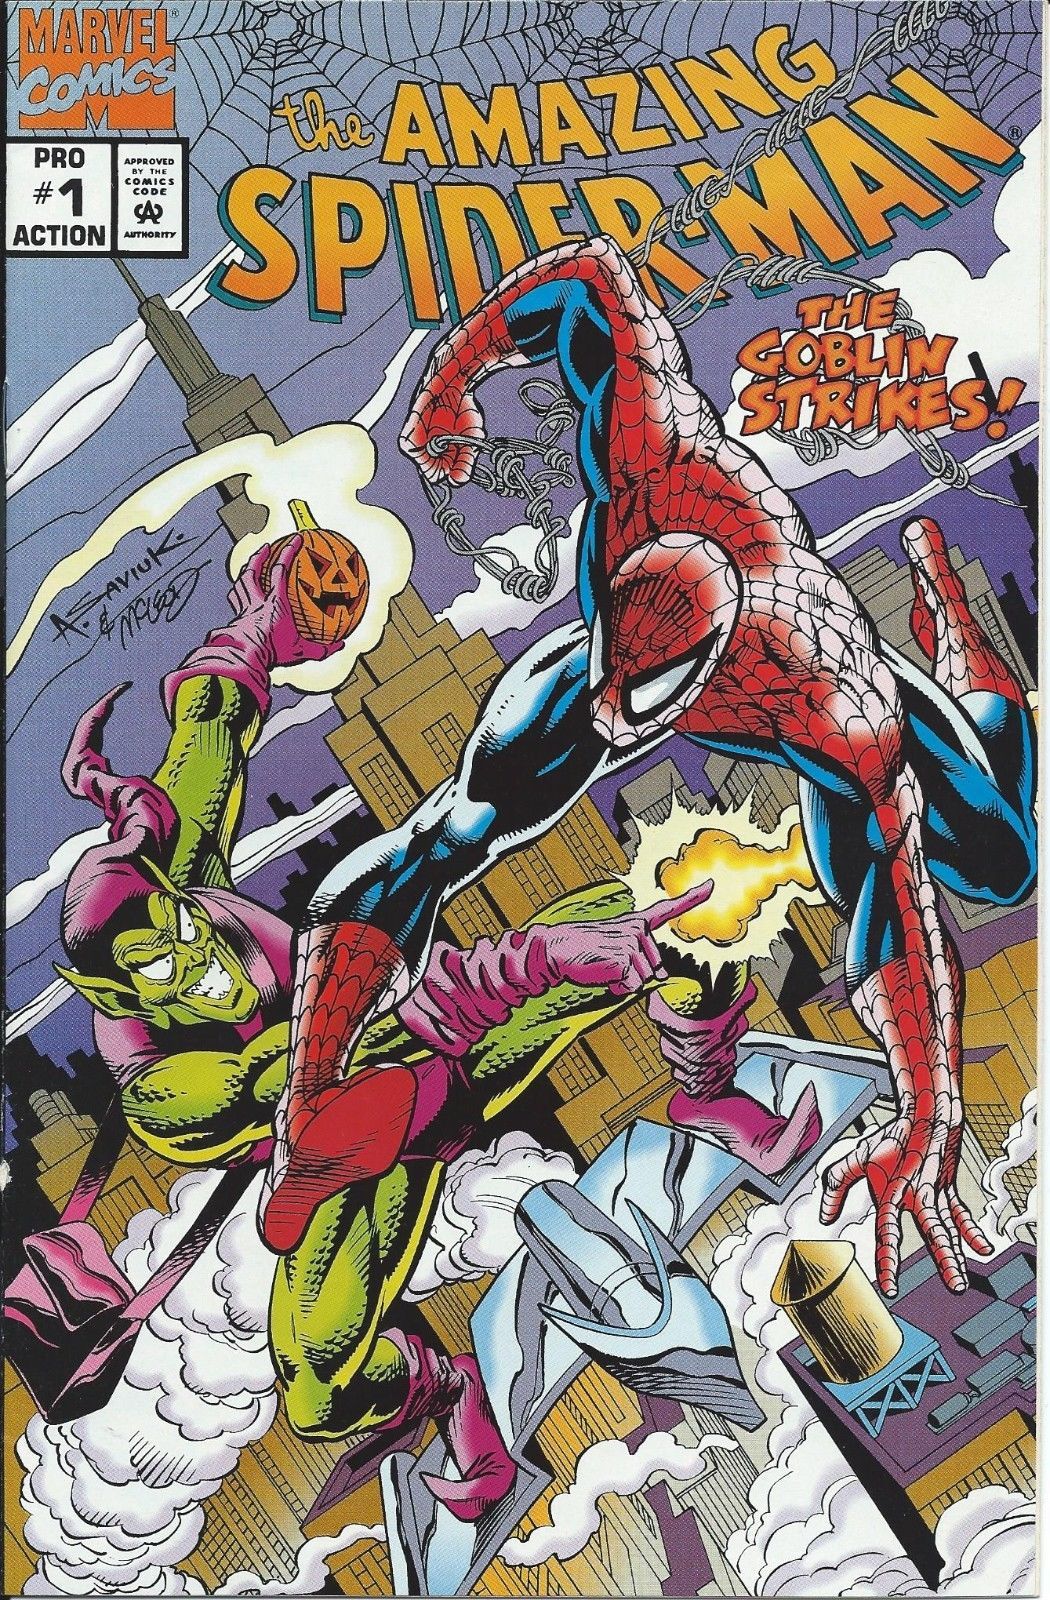 Amazing Spider-Man: The Goblin Strikes #1 Comic